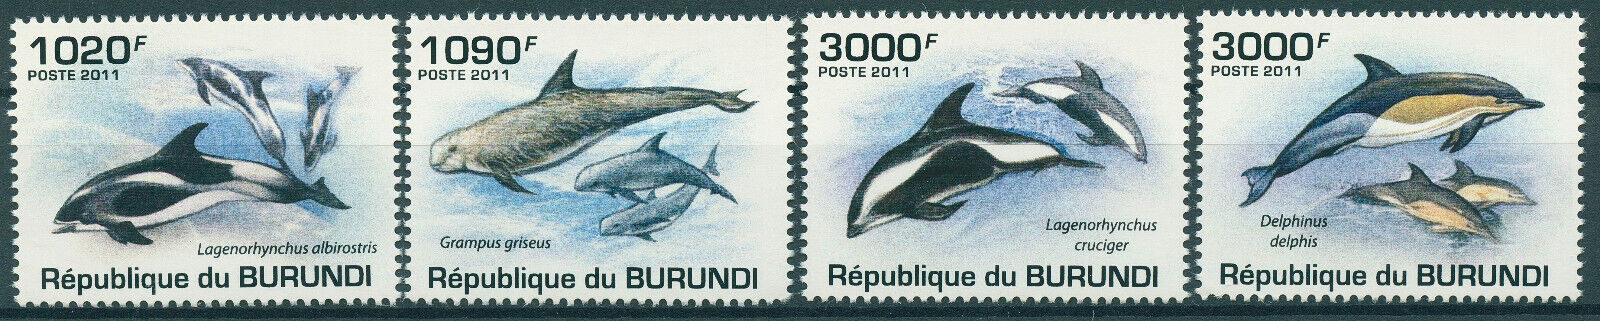 Burundi 2011 MNH Marine Animals Stamps Dolphins Hourglass Risso's Dolphin 4v Set